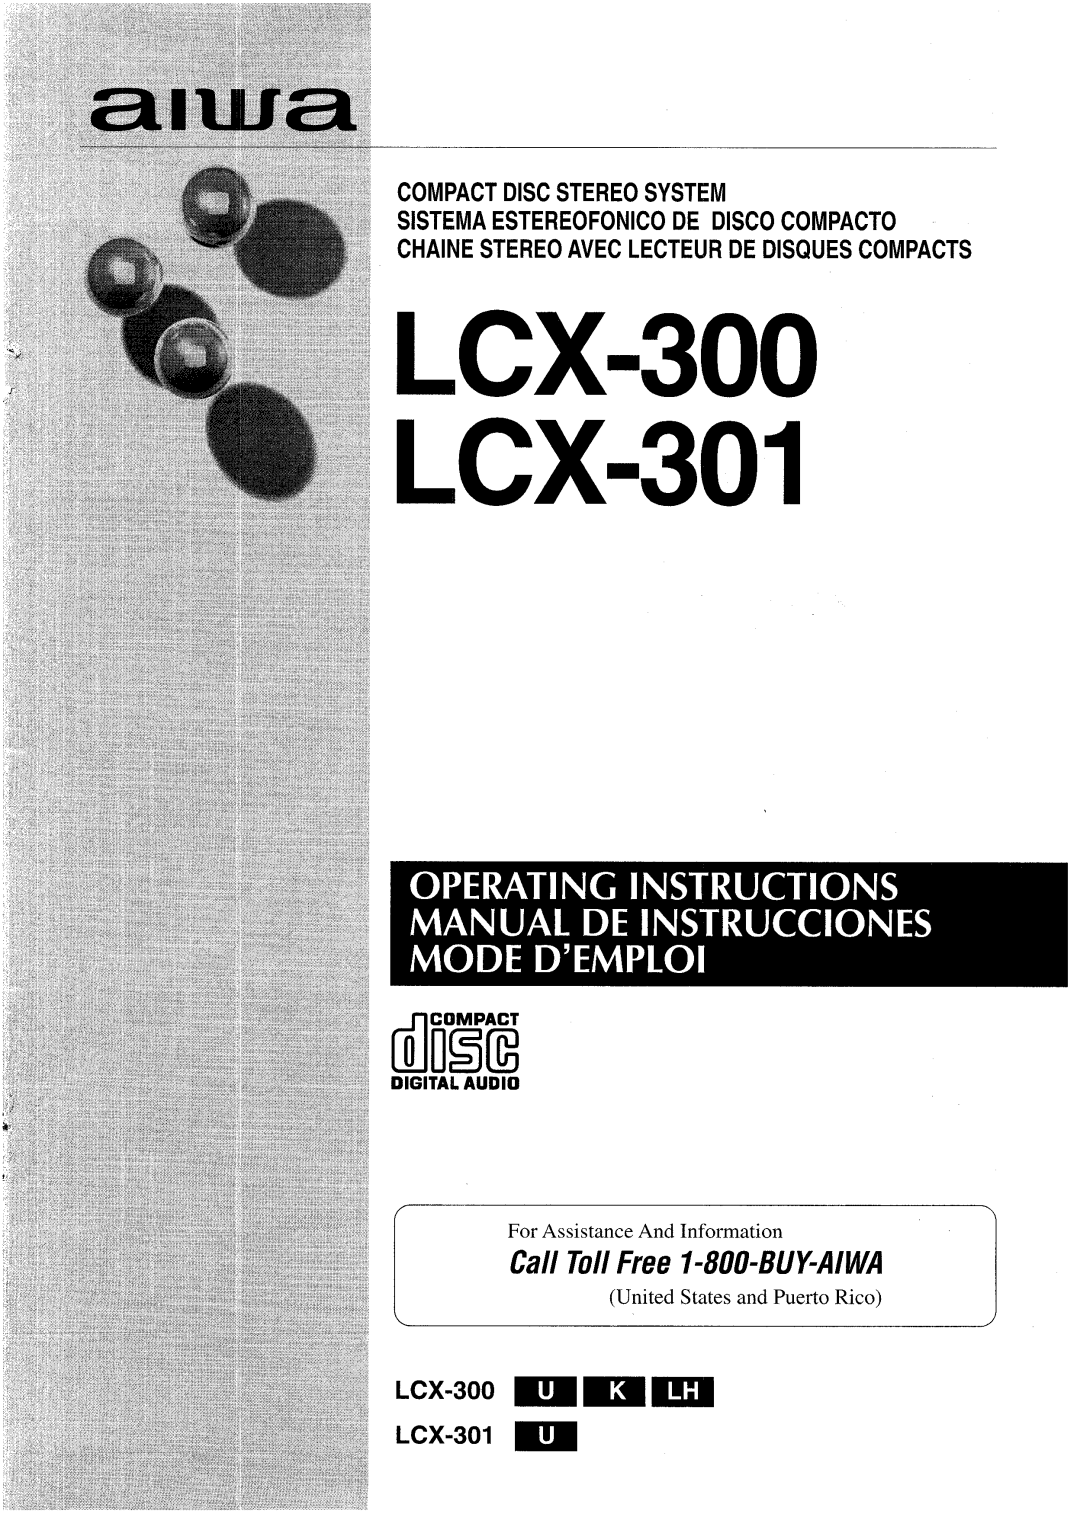 Aiwa manual Compact Disc Stereo System Sistema Estereofonico De Disco Compacto, LCX-300 ~m~, LCX-301 ~, LCX=300 LCX-301 